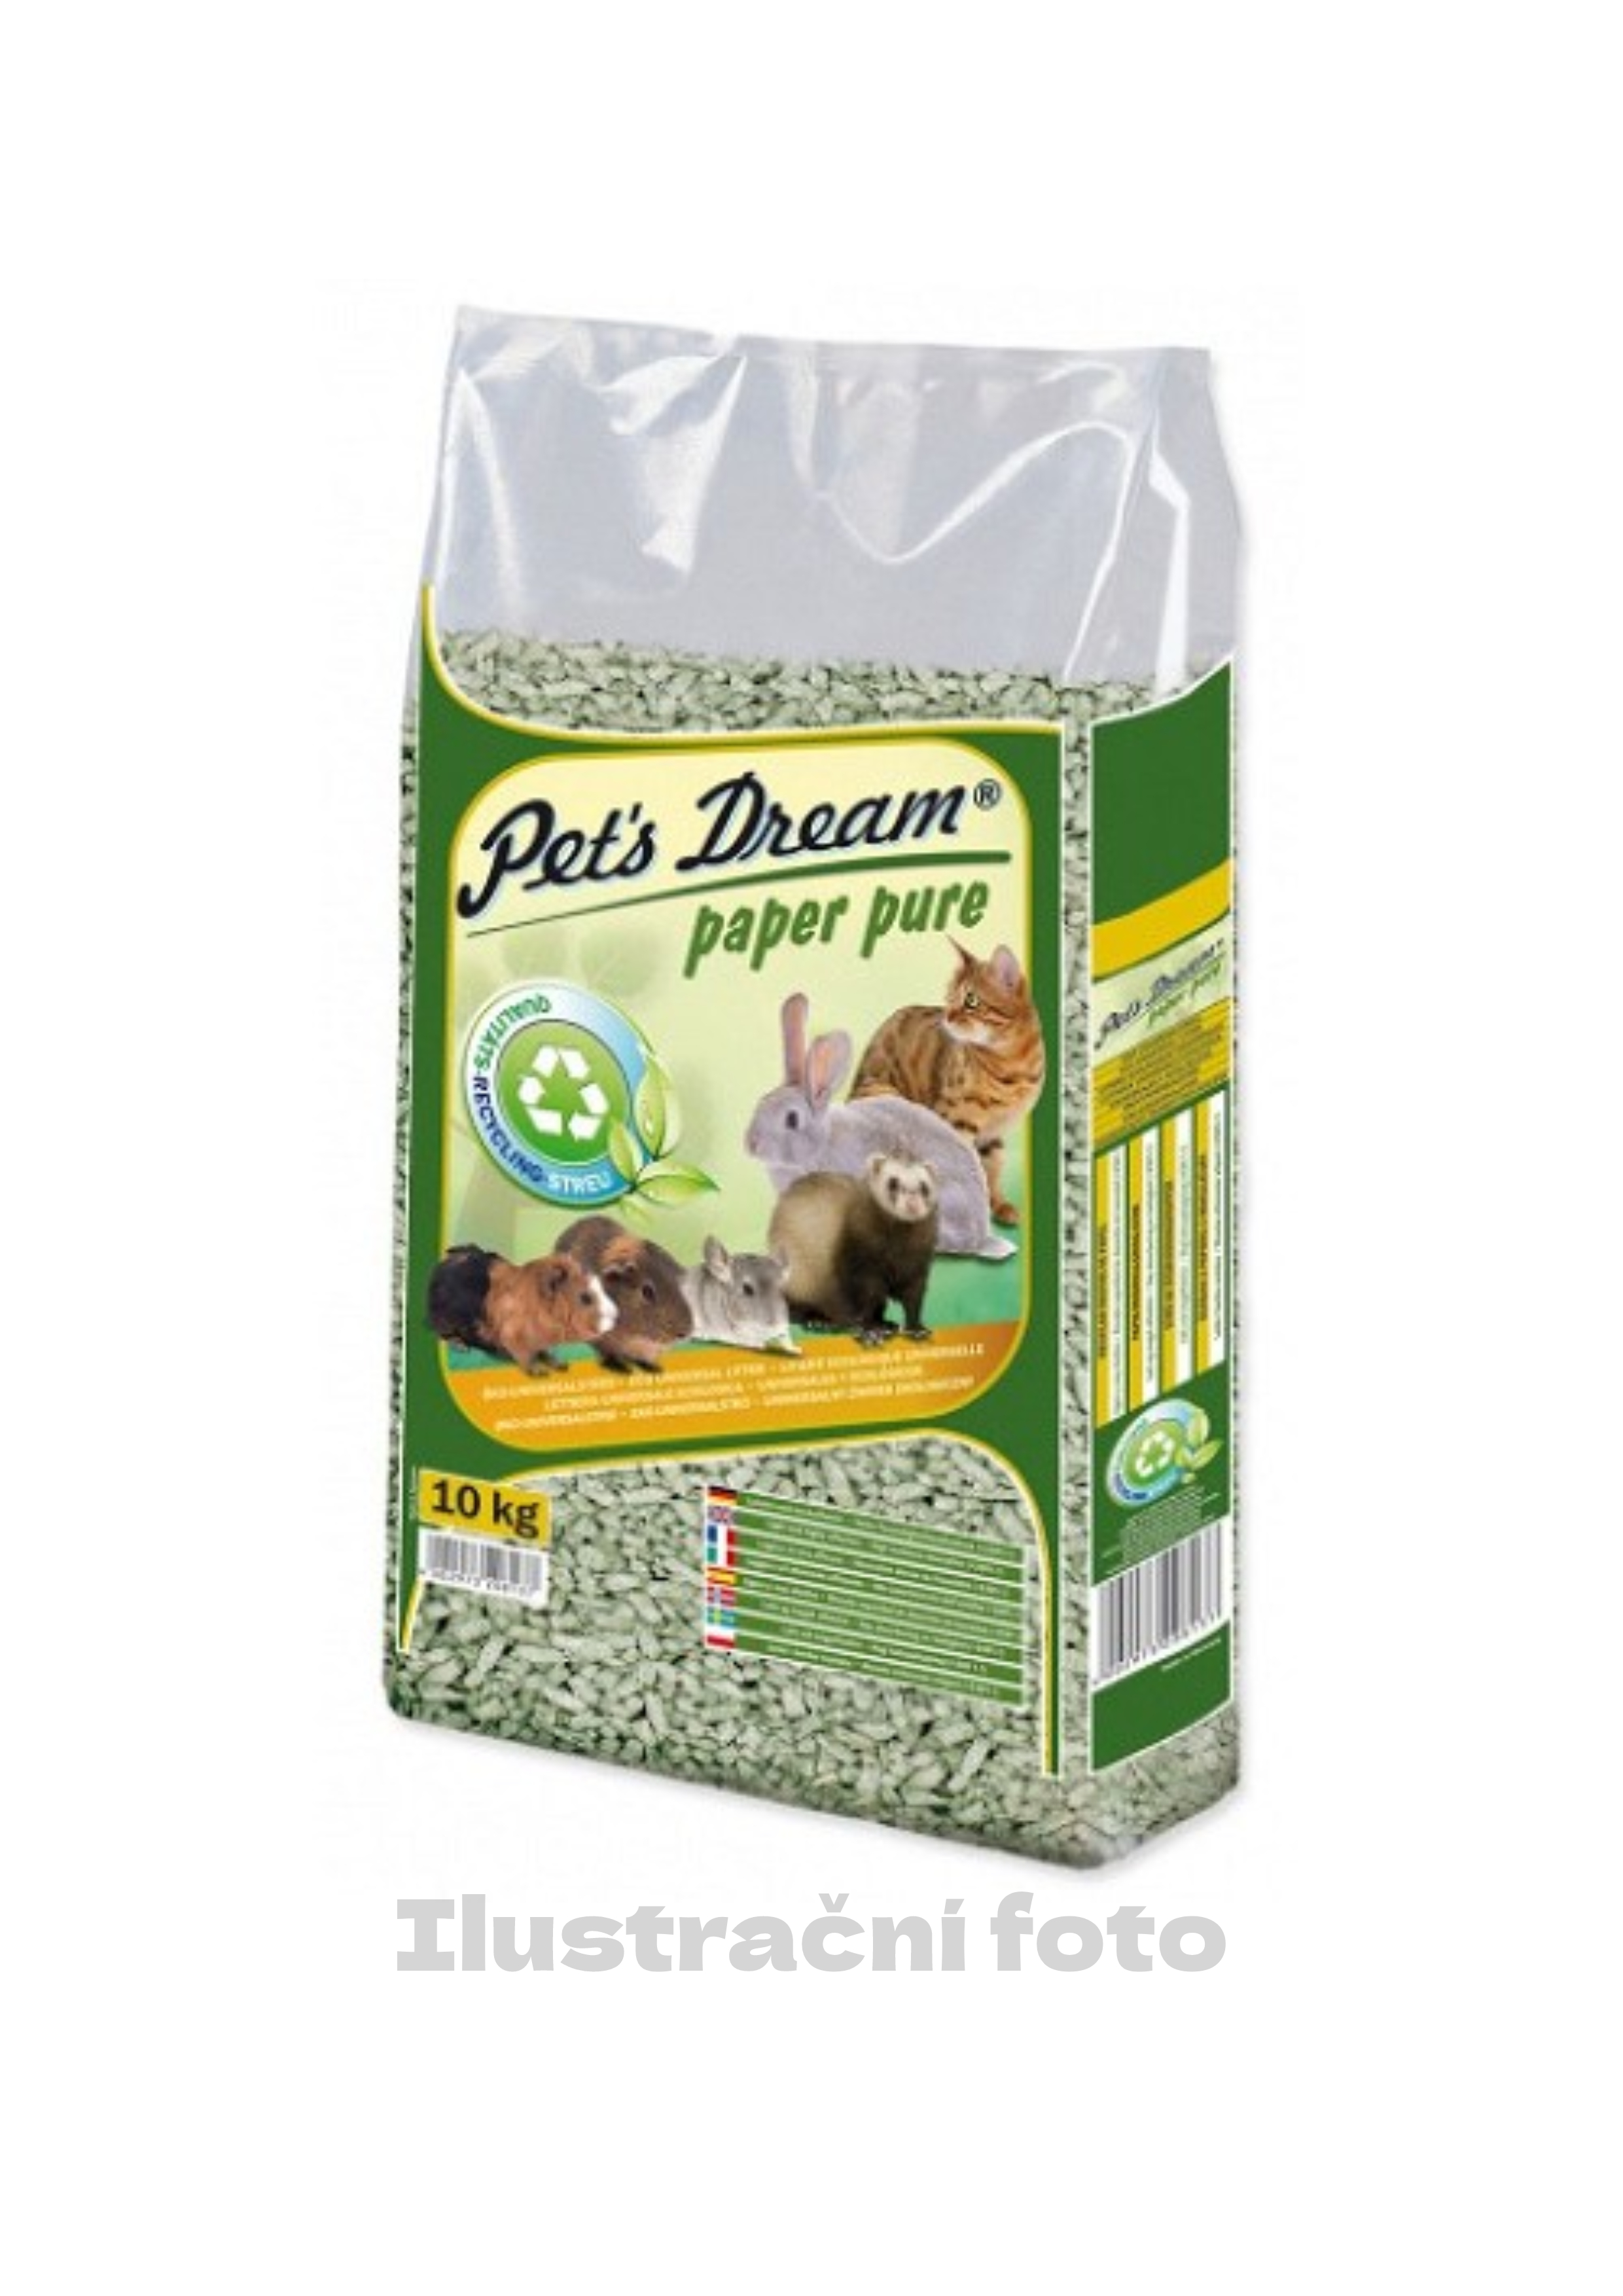 Pet's Dream paper pure 10l/4.8kg